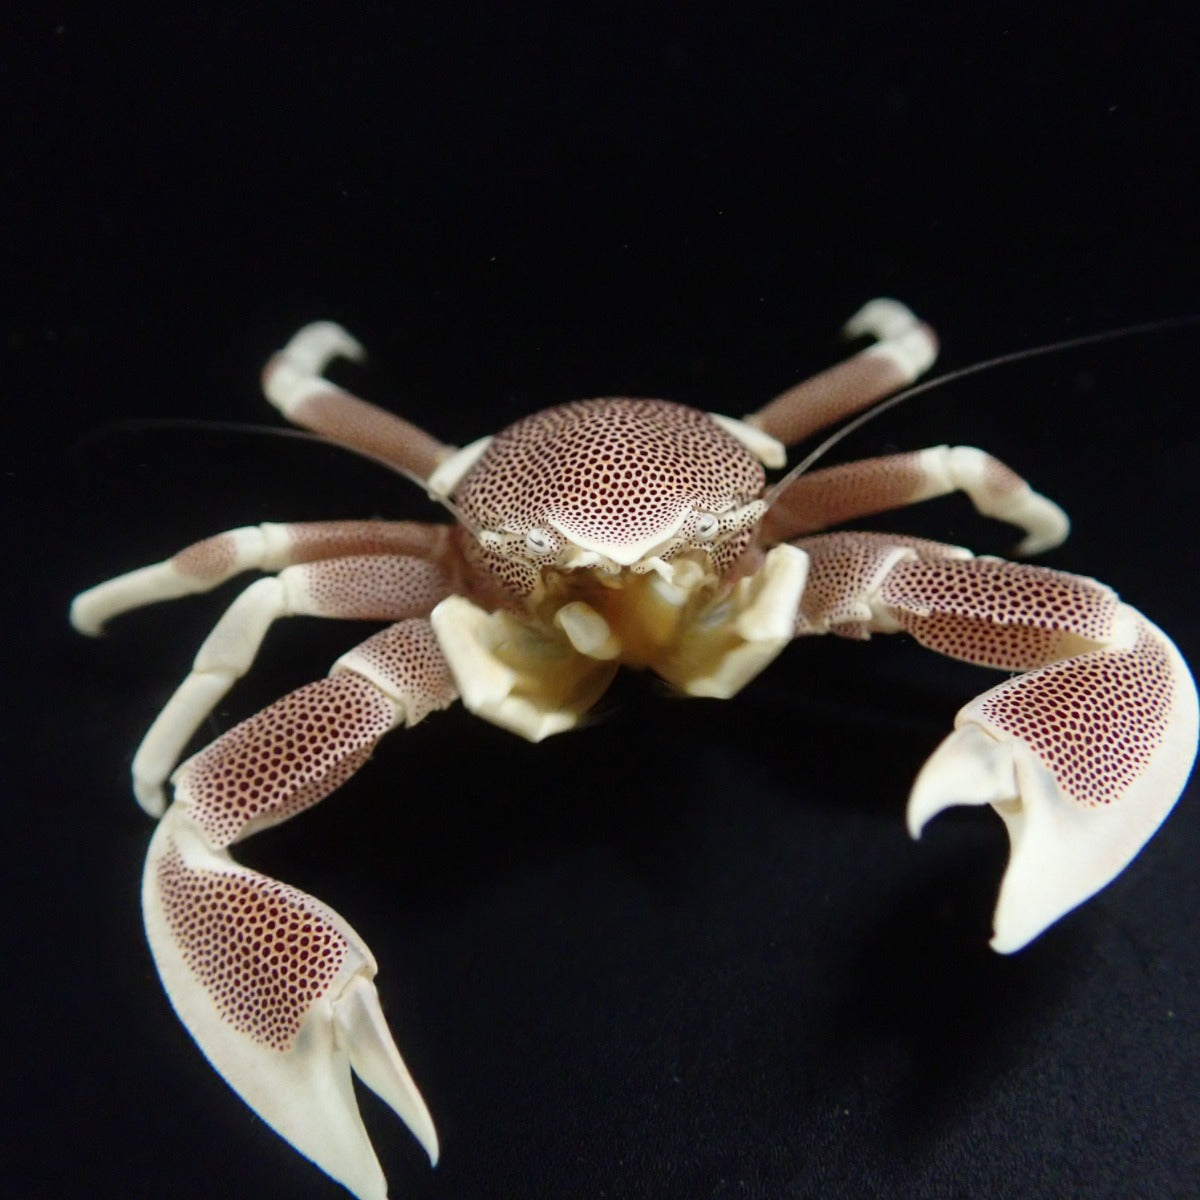 Neopetrolisthes maculatus - Porcelain anemone crab